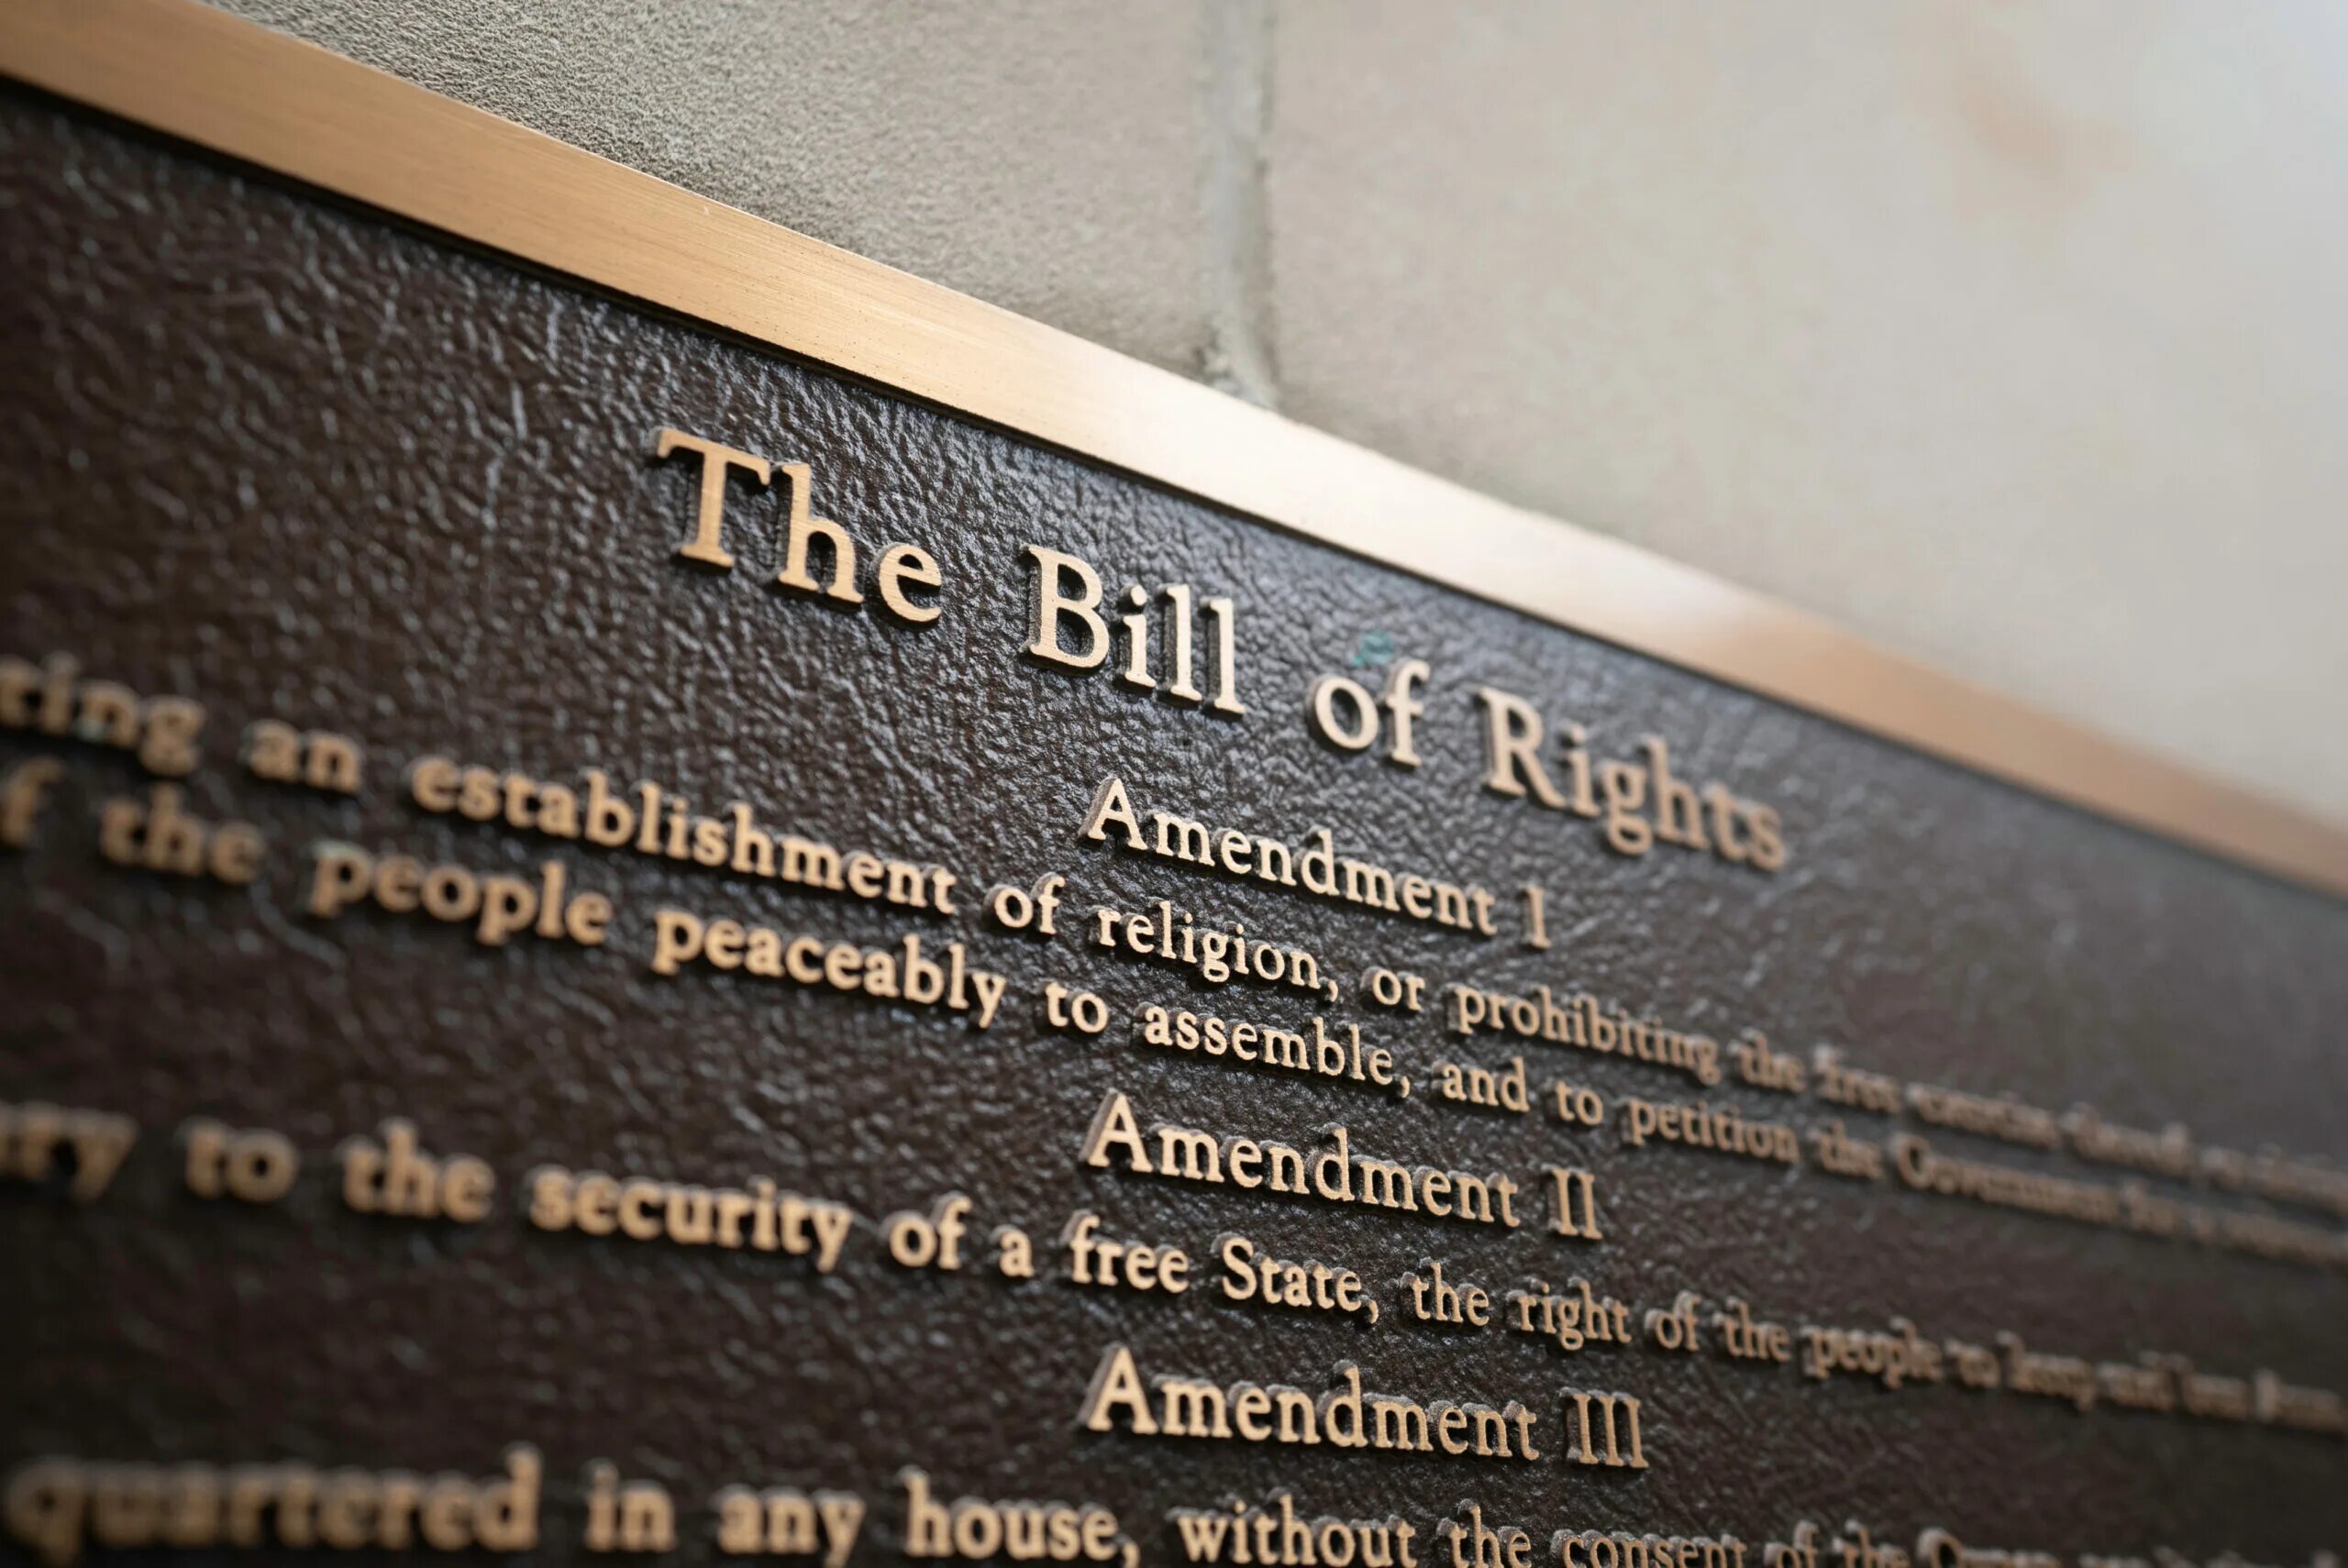 The Bill of rights. Международный Билль прав человека. Международный Билль о правах. Международный Билль о правах человека. Facts rights